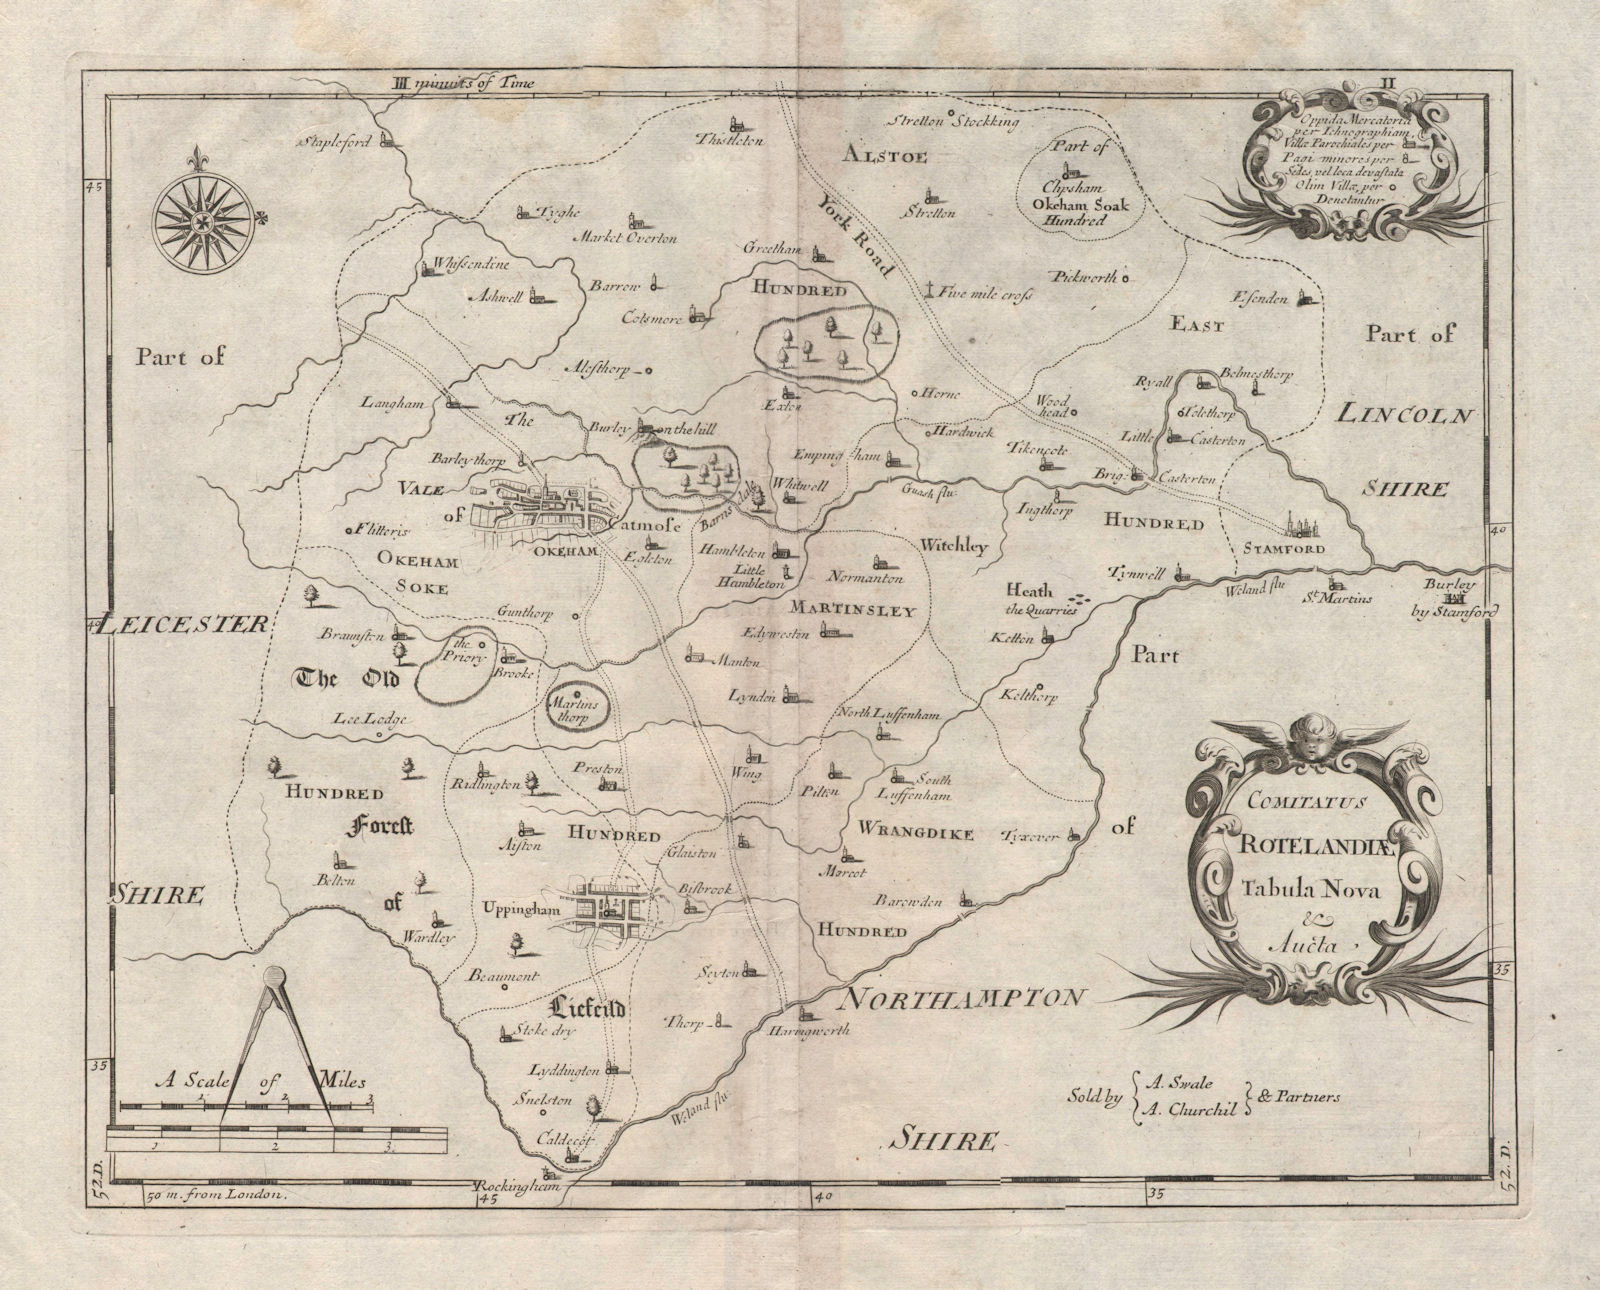 Rutland county map 'COMITATUS ROTELANDIAE' by ROBERT MORDEN. Oakham 1695